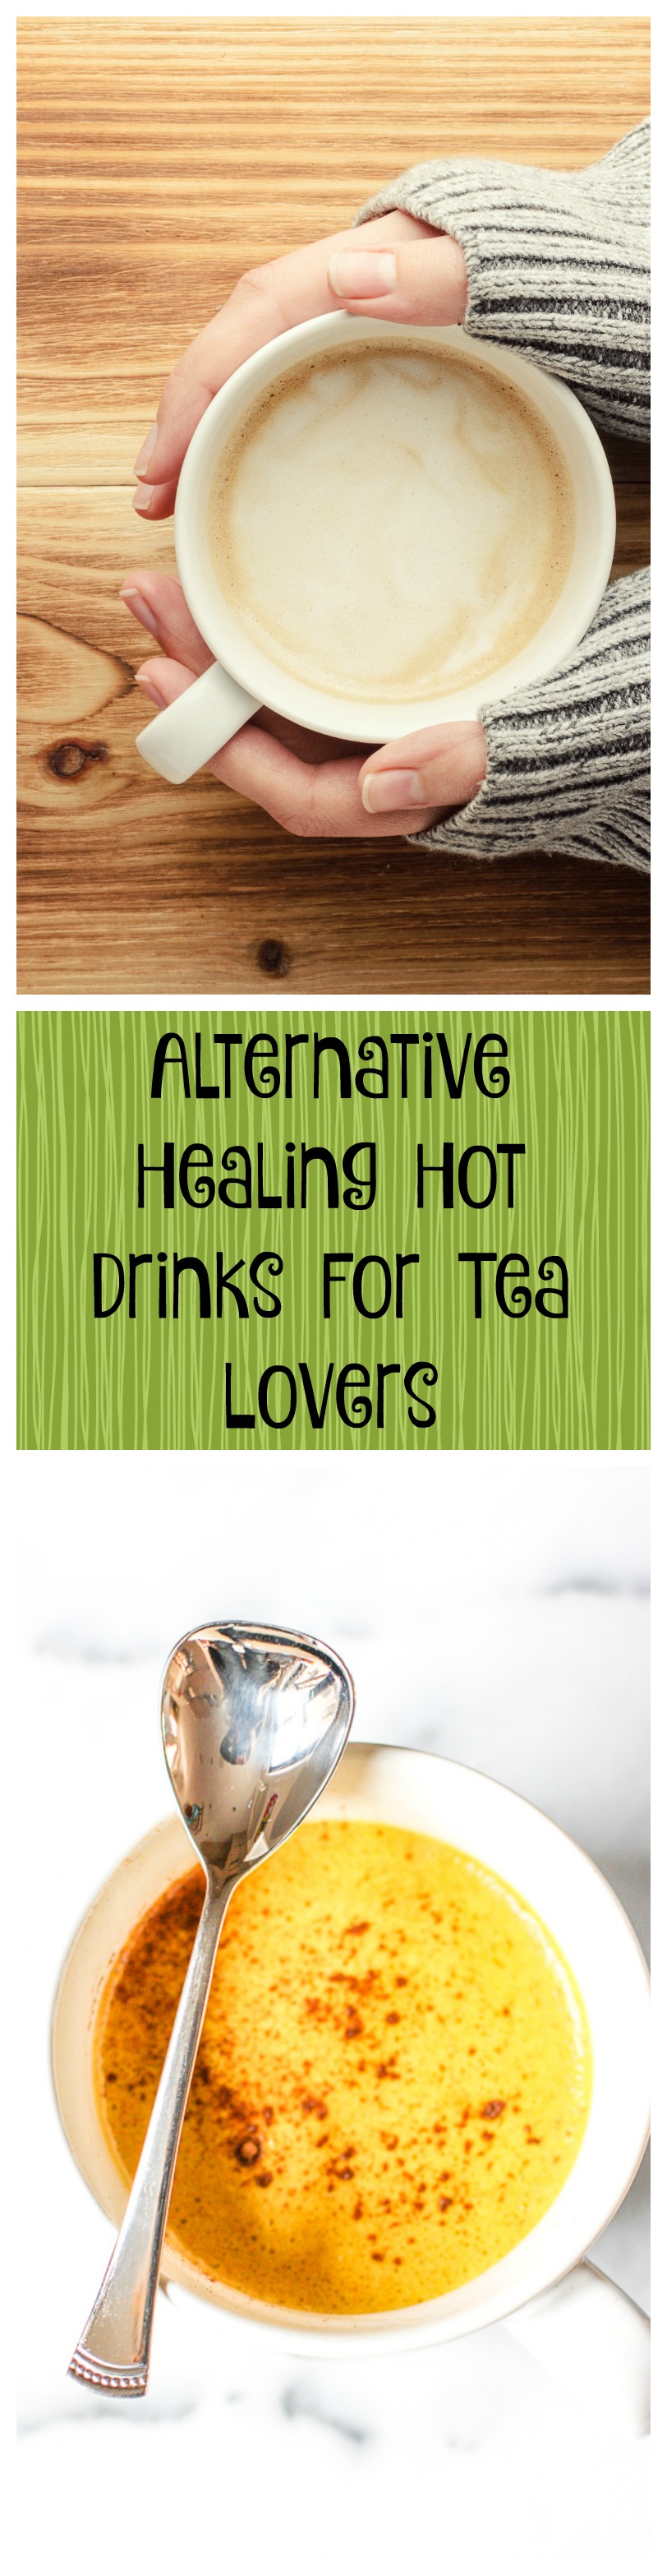 alternative healing hot drinks for tea lovers